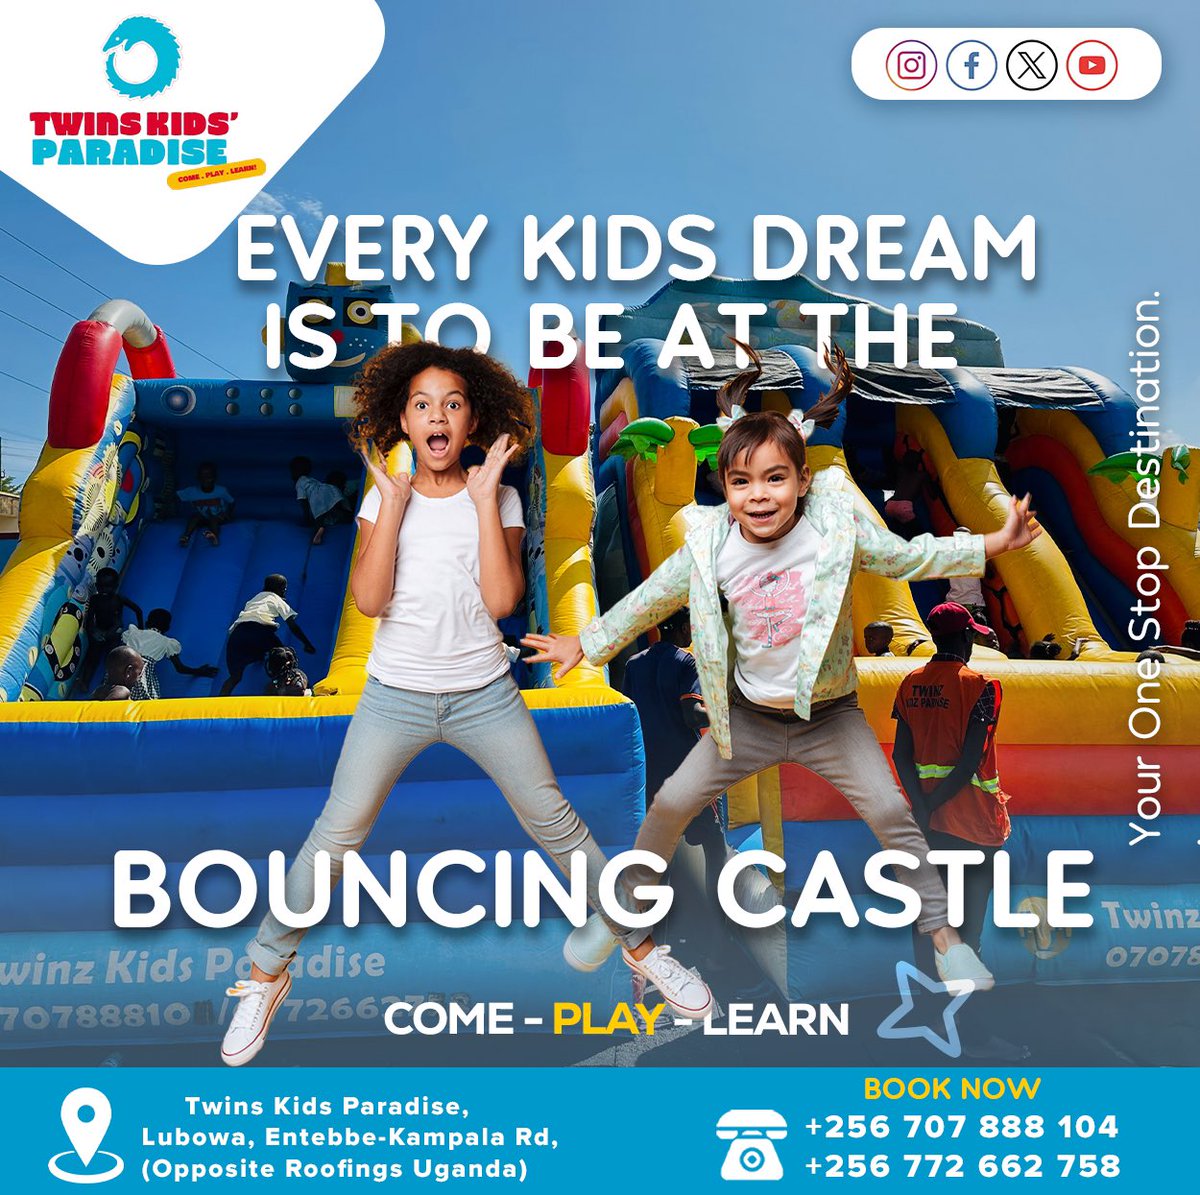 Bouncing Castles available. 
Every kids dream! 
#BouncingCastle #TwinsKidsParadise 
#KampalaCreme